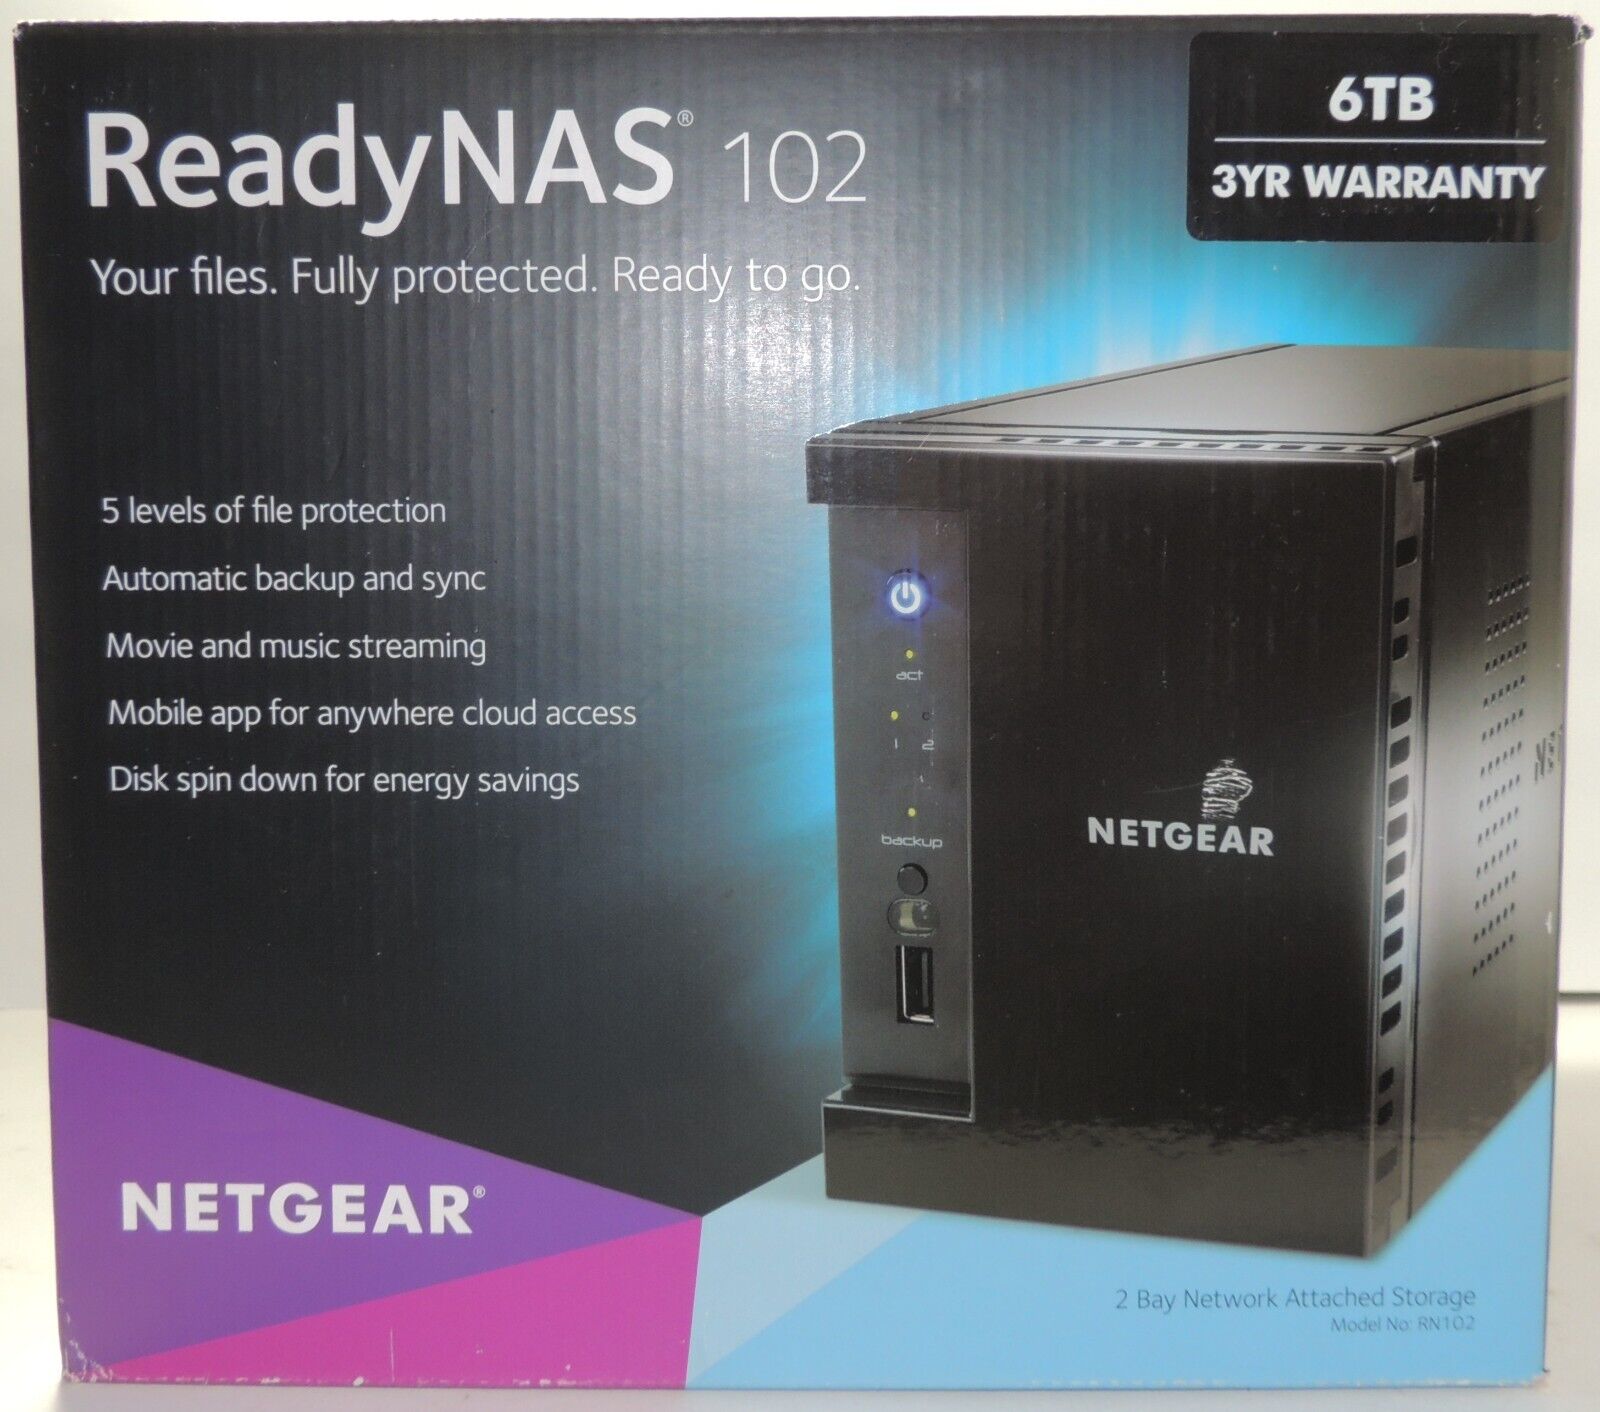 Netgear ReadyNAS 102 2-Bay Network Attached Storage (RN10223D-100NAS) 6TB - NEW